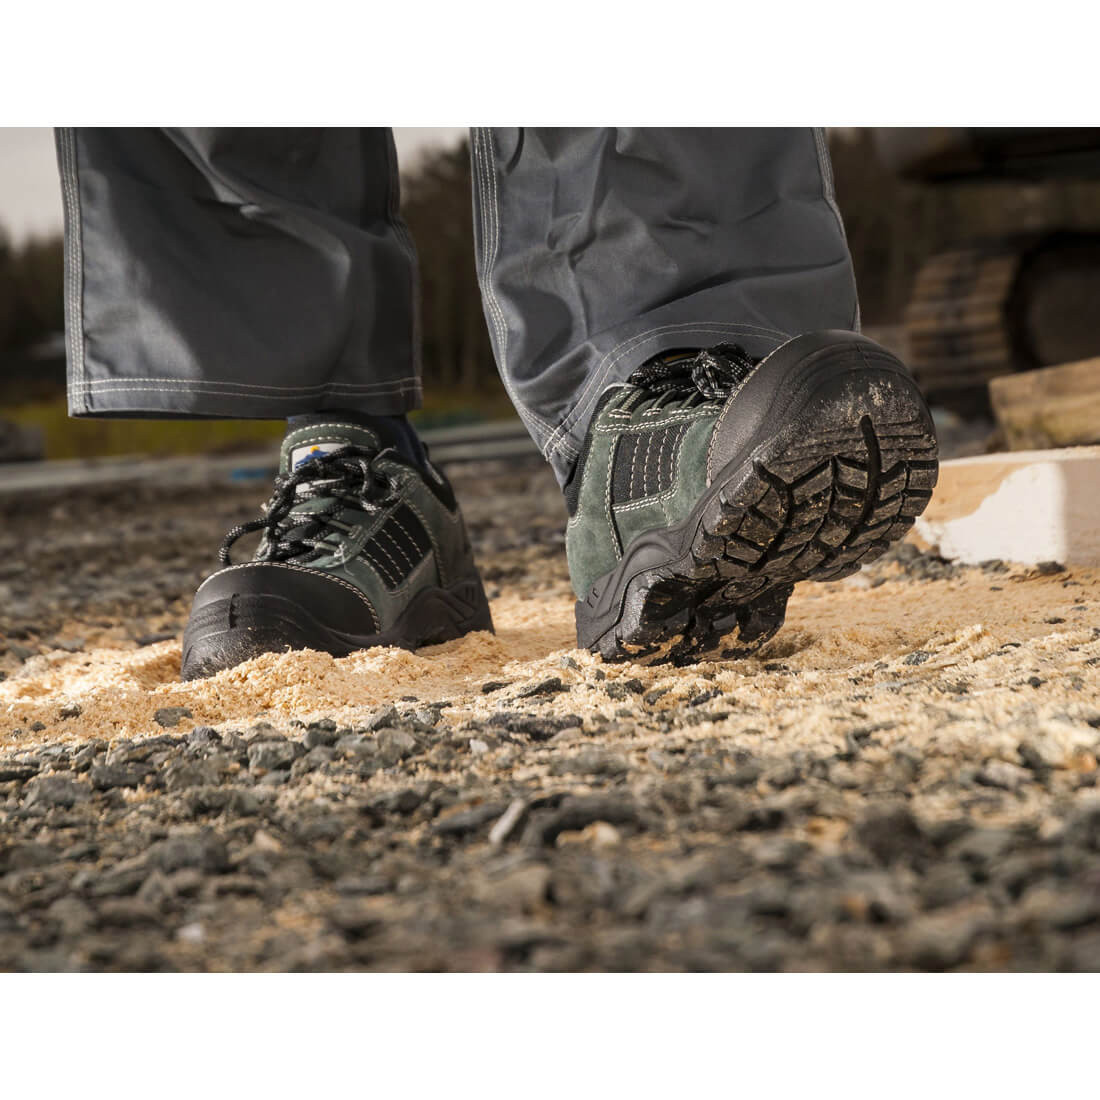 Pantof Trekker Compositelite™ S1 - Incaltaminte de protectie | Bocanci, Pantofi, Sandale, Cizme